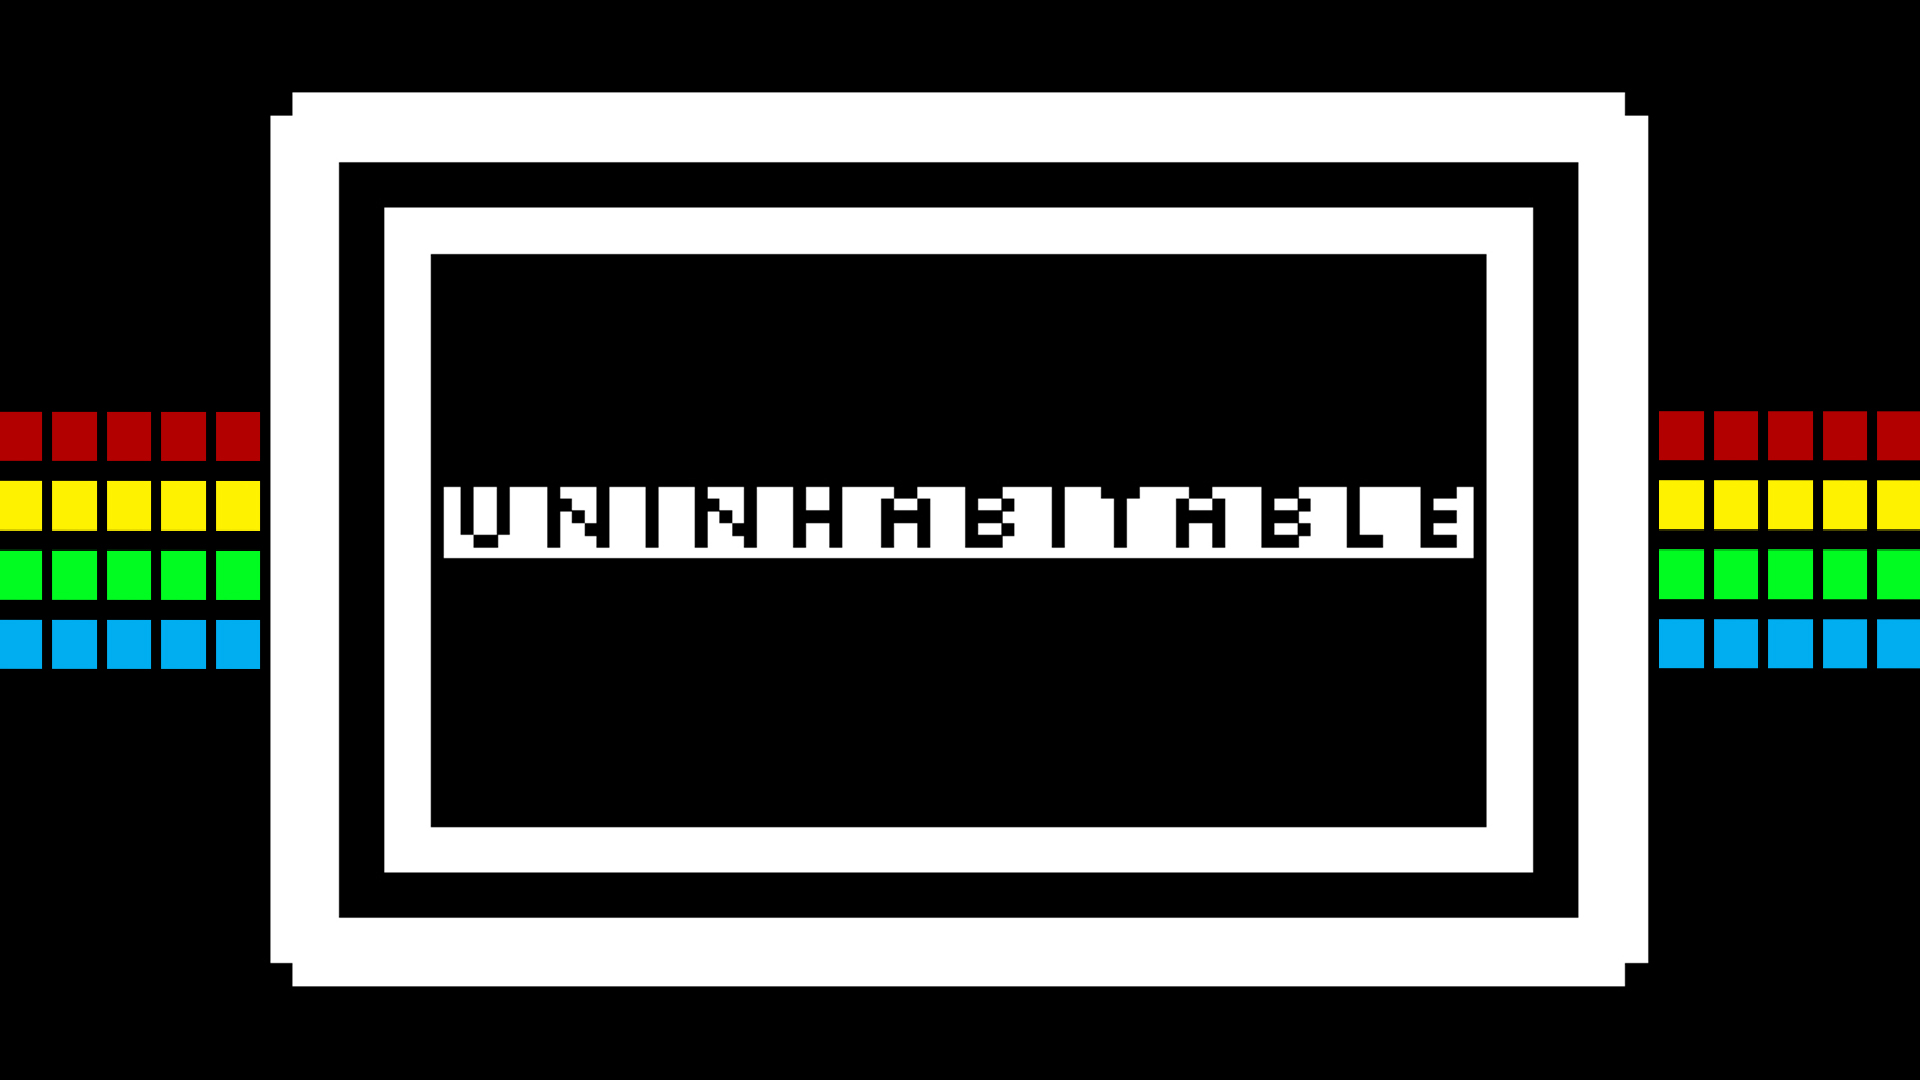 Uninhabitable